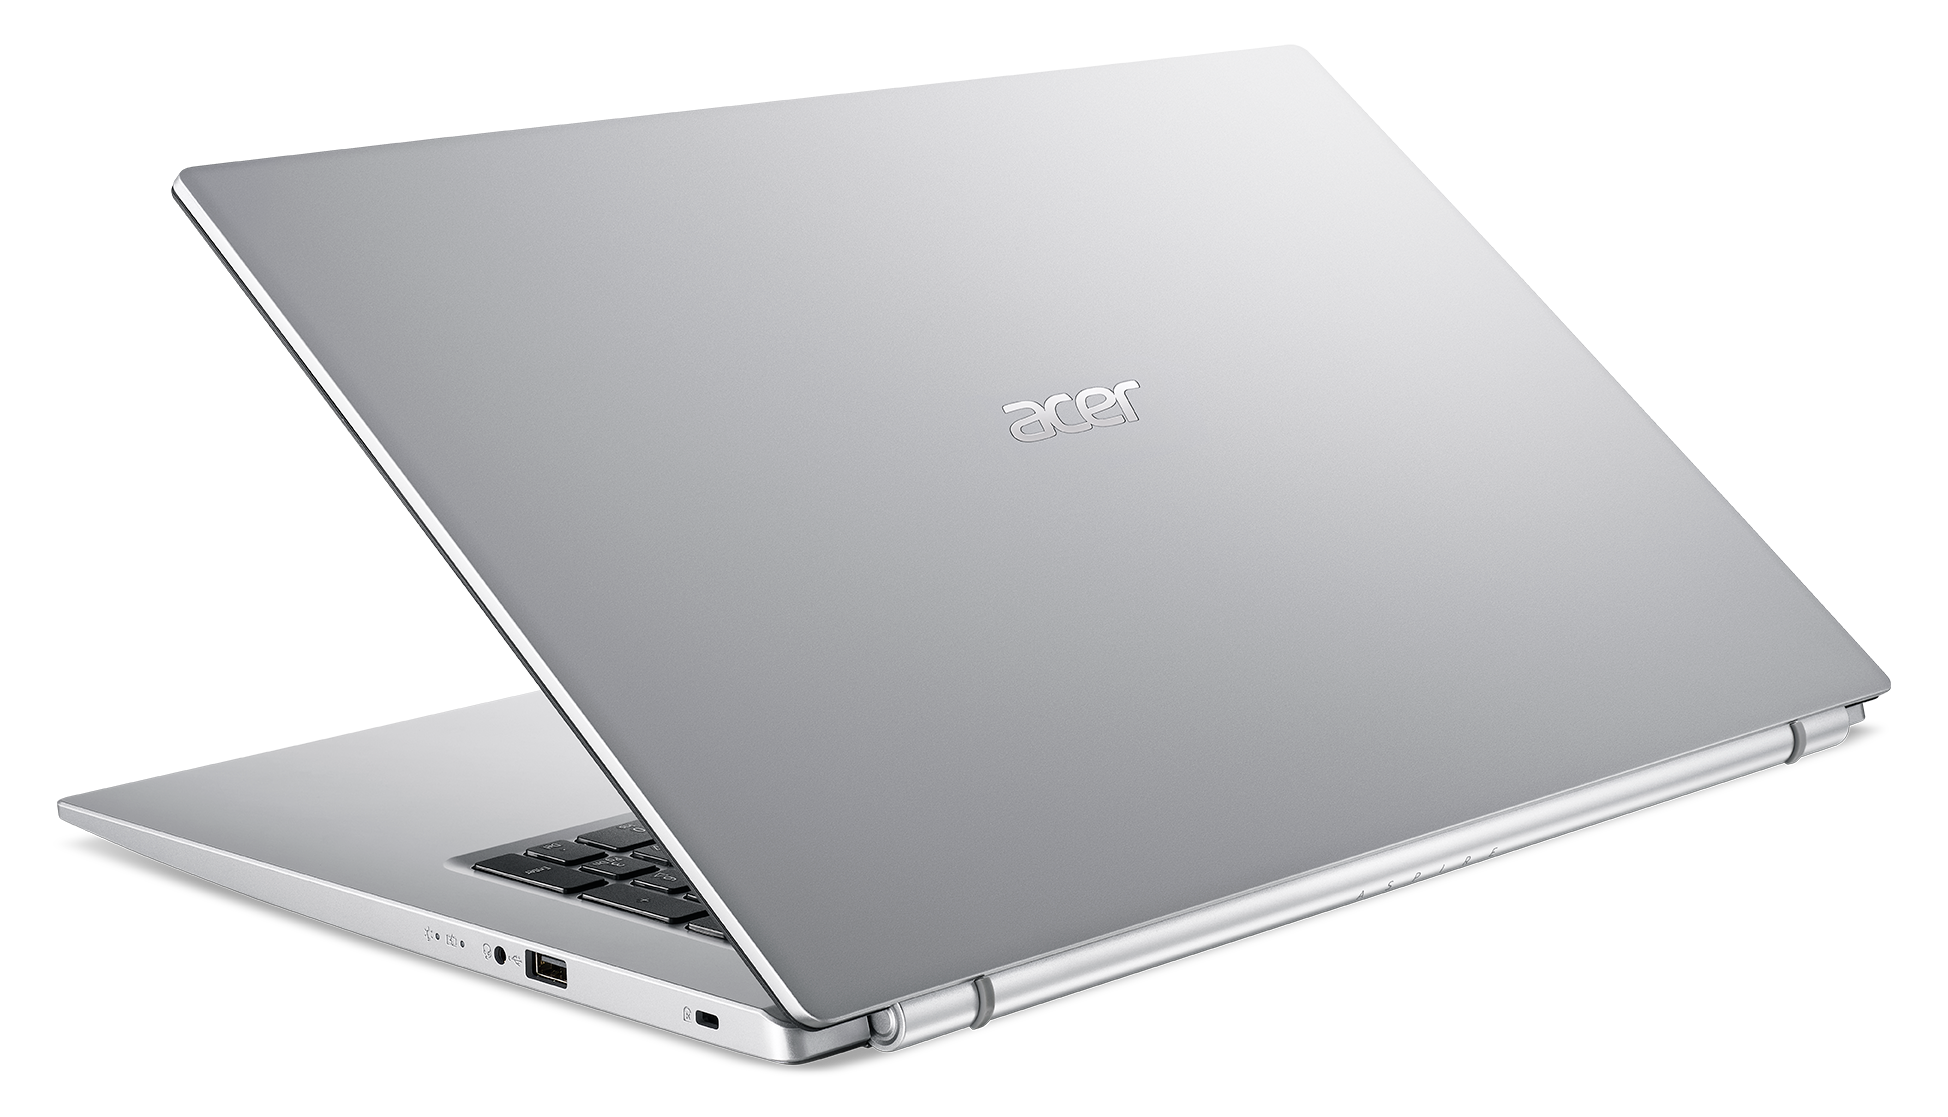 Acer Swift 3, 14.0" Full HD, 11th Gen Intel Core i5-1135G7, 8GB, 512GB SSD, Silver, Windows 10, SF314-511-51A3 - image 5 of 7